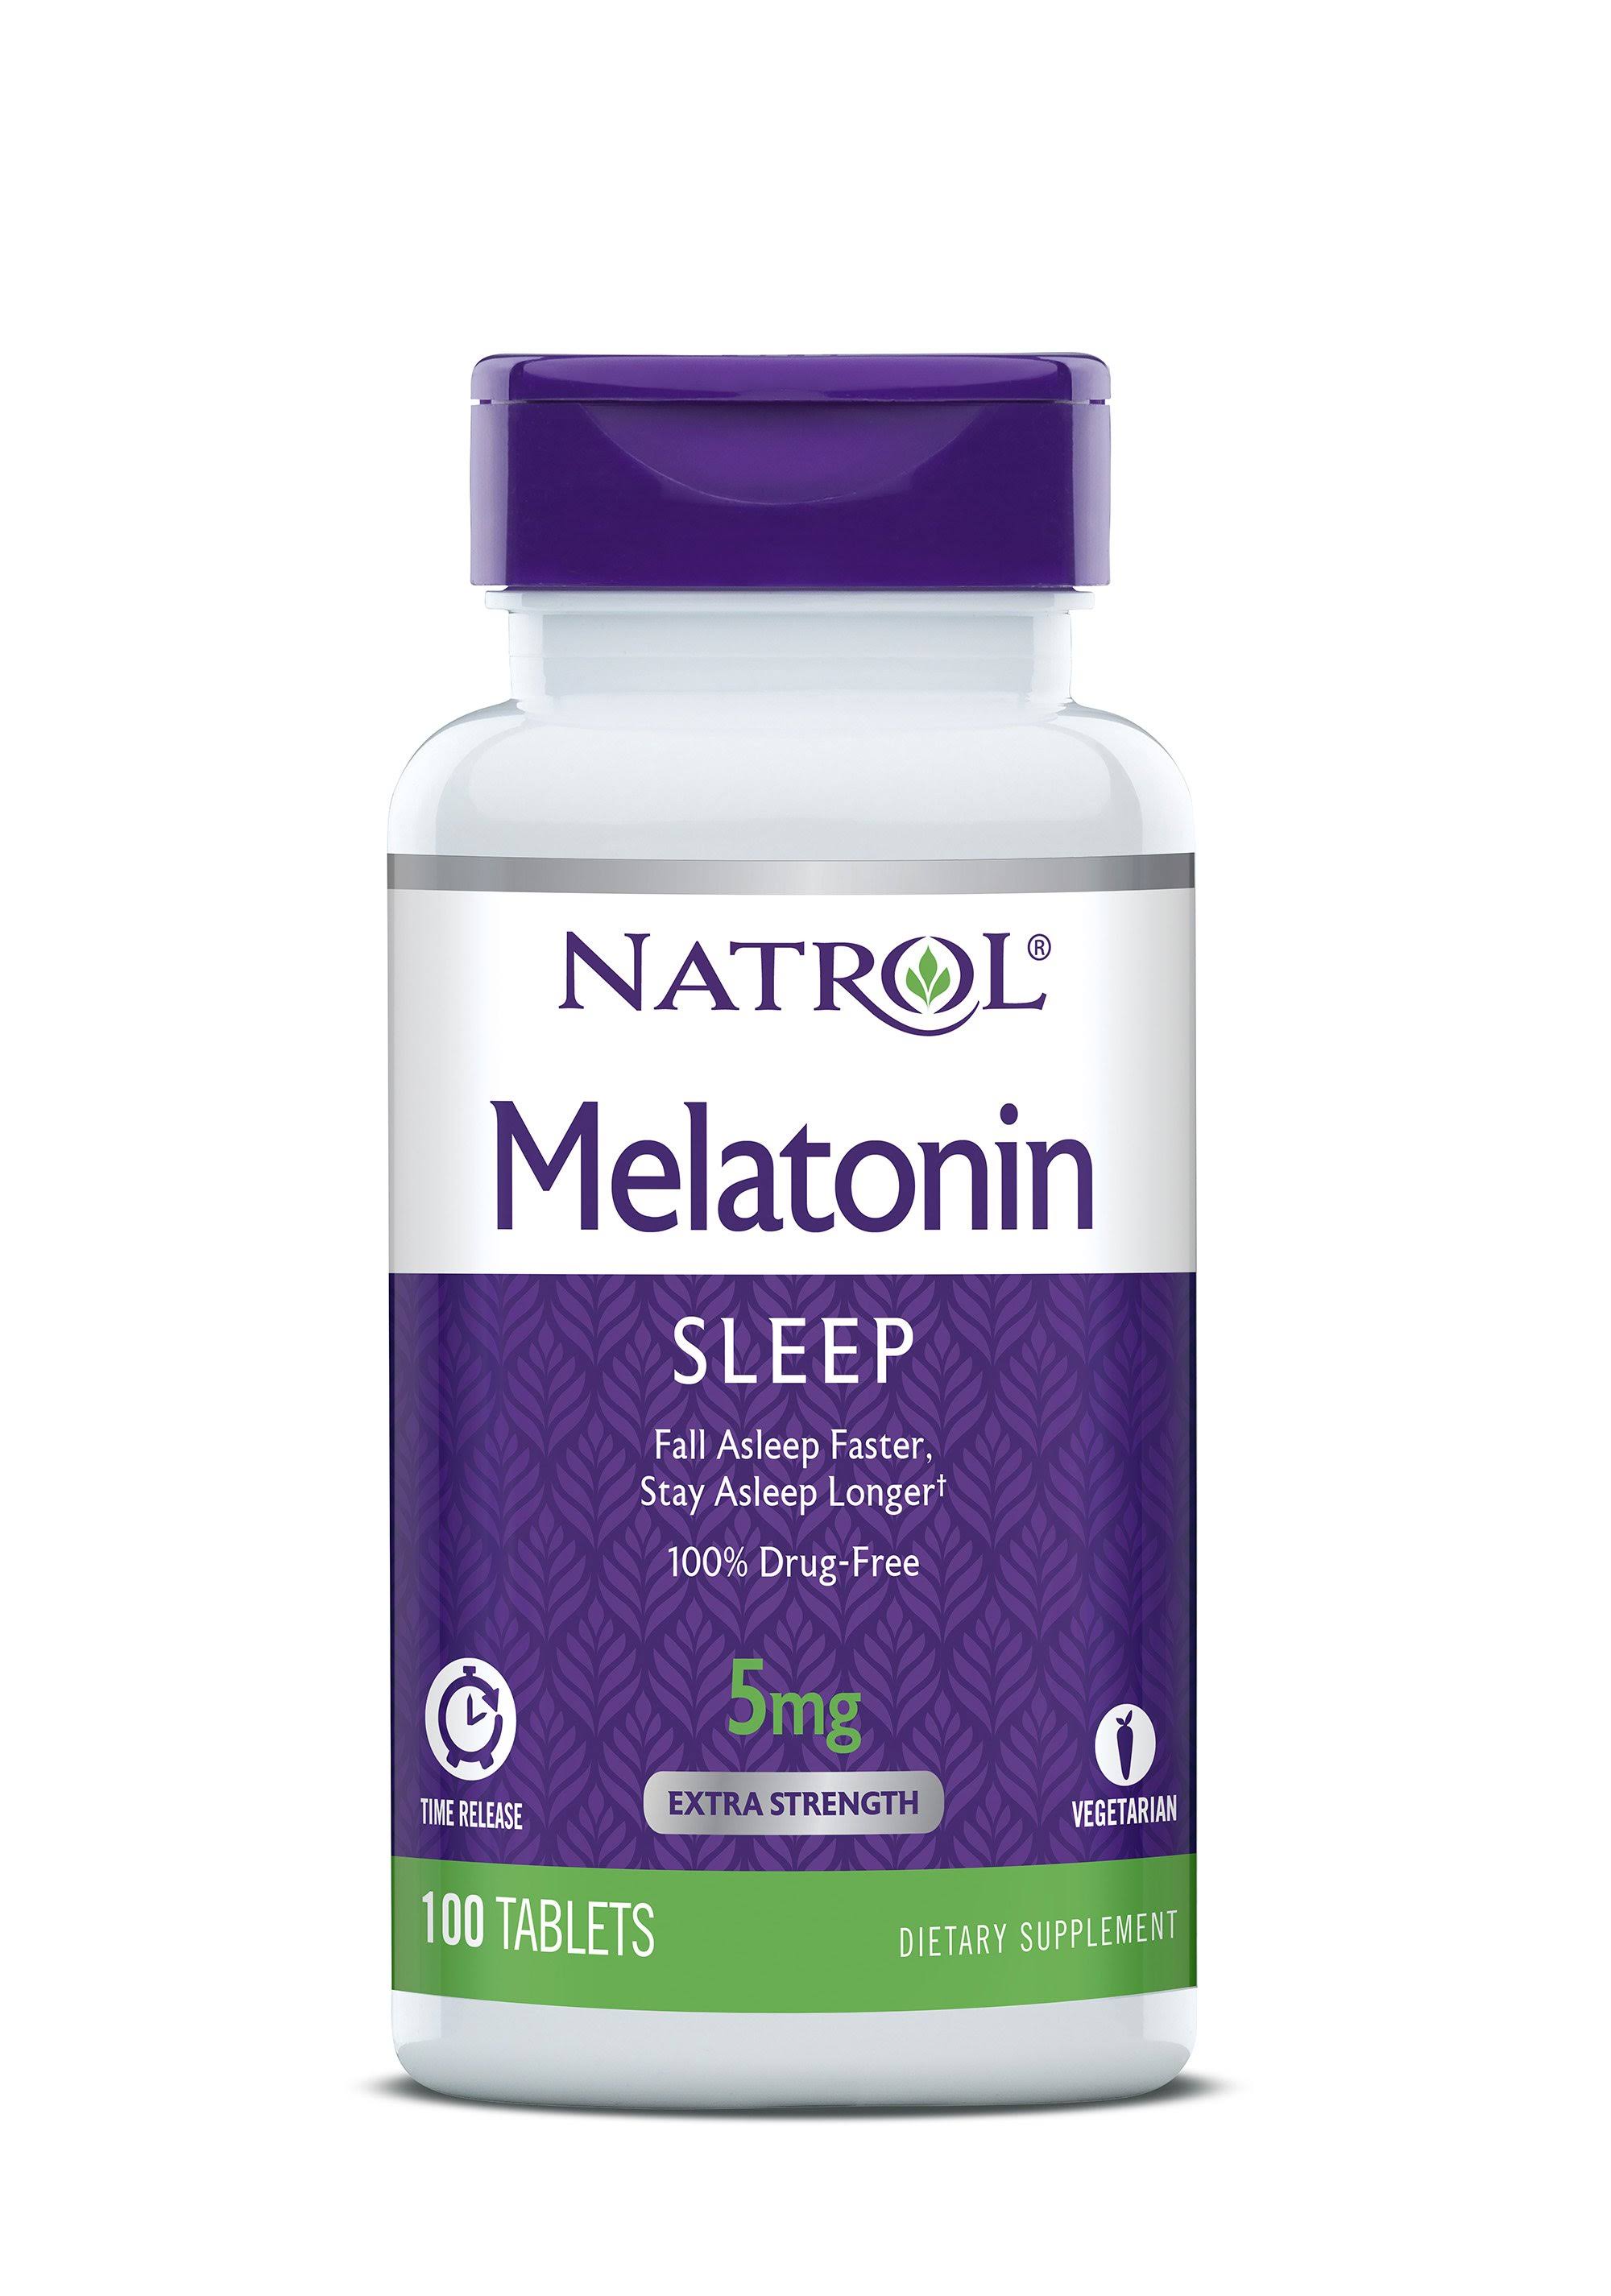 Natrol Melatonin 5mg Time Release - 100 Tablets